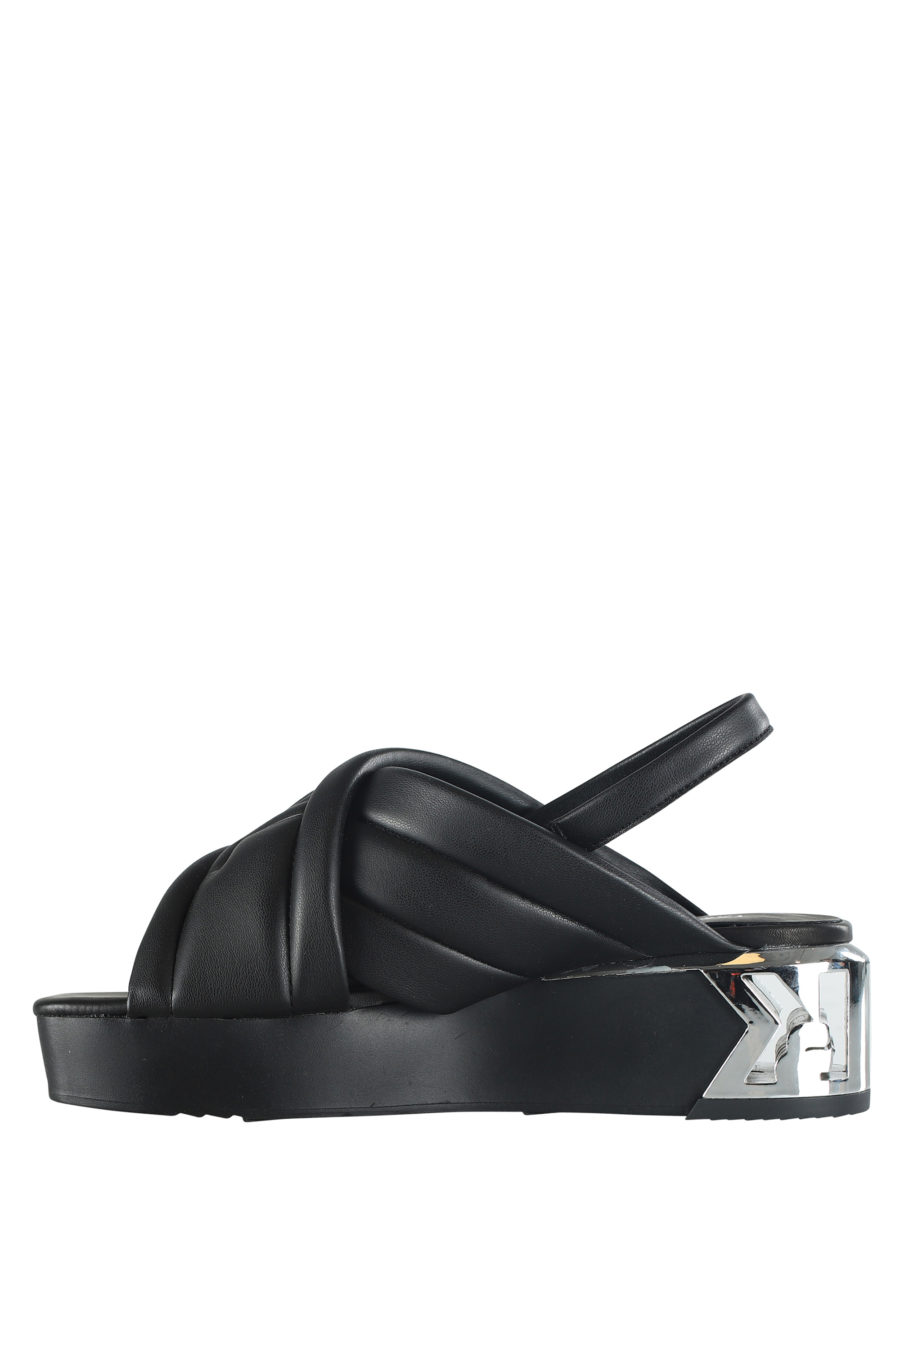 Sandalias negras acolchonadas con logo negro y plataforma - IMG 5333